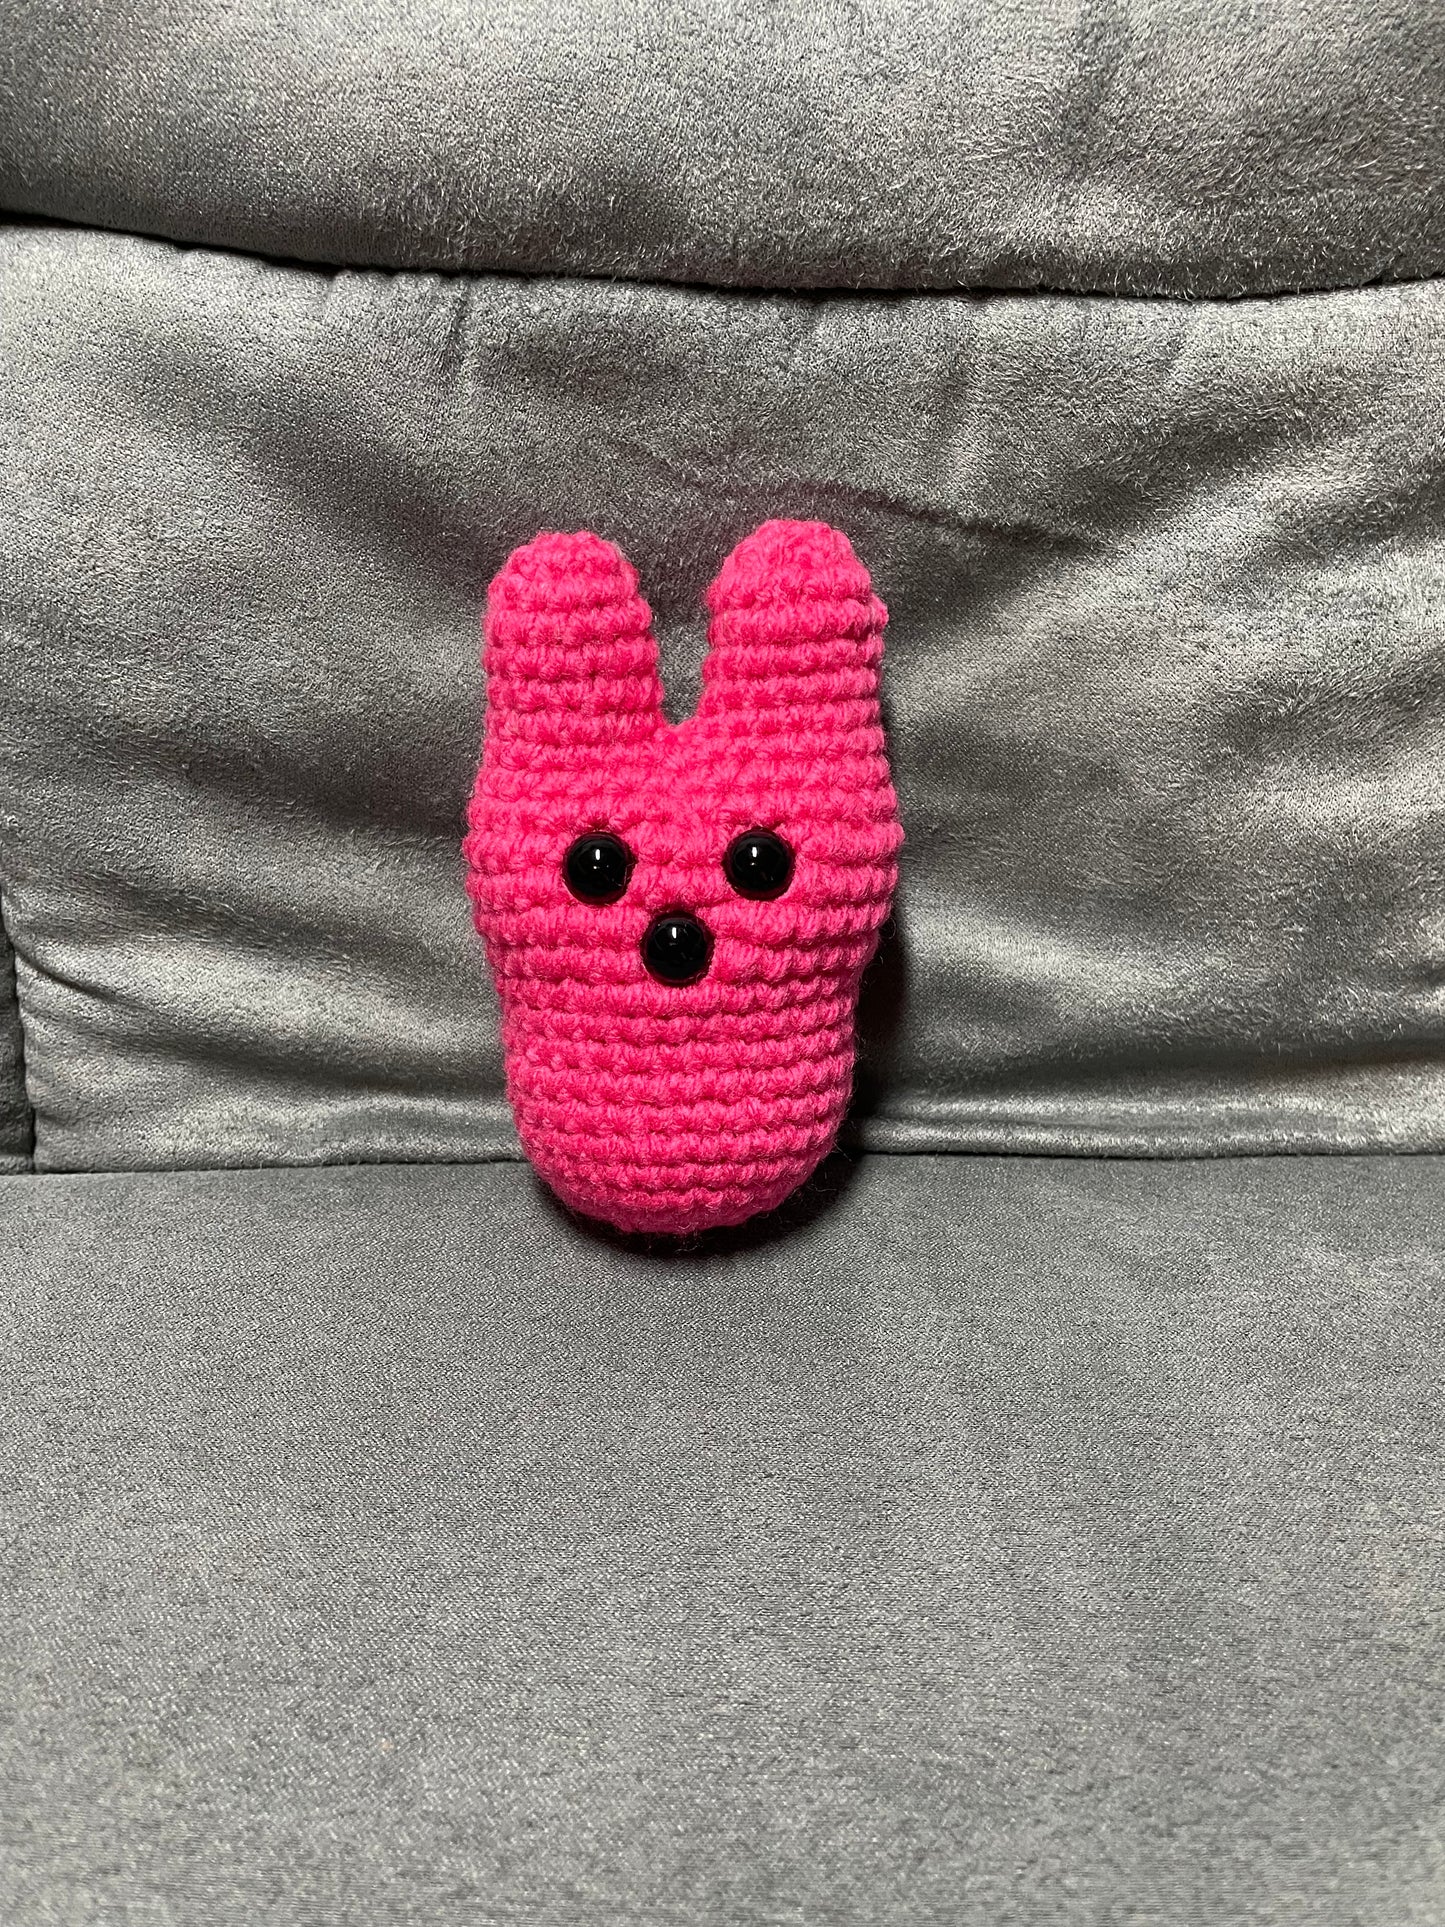 Tiny pink peep bunny